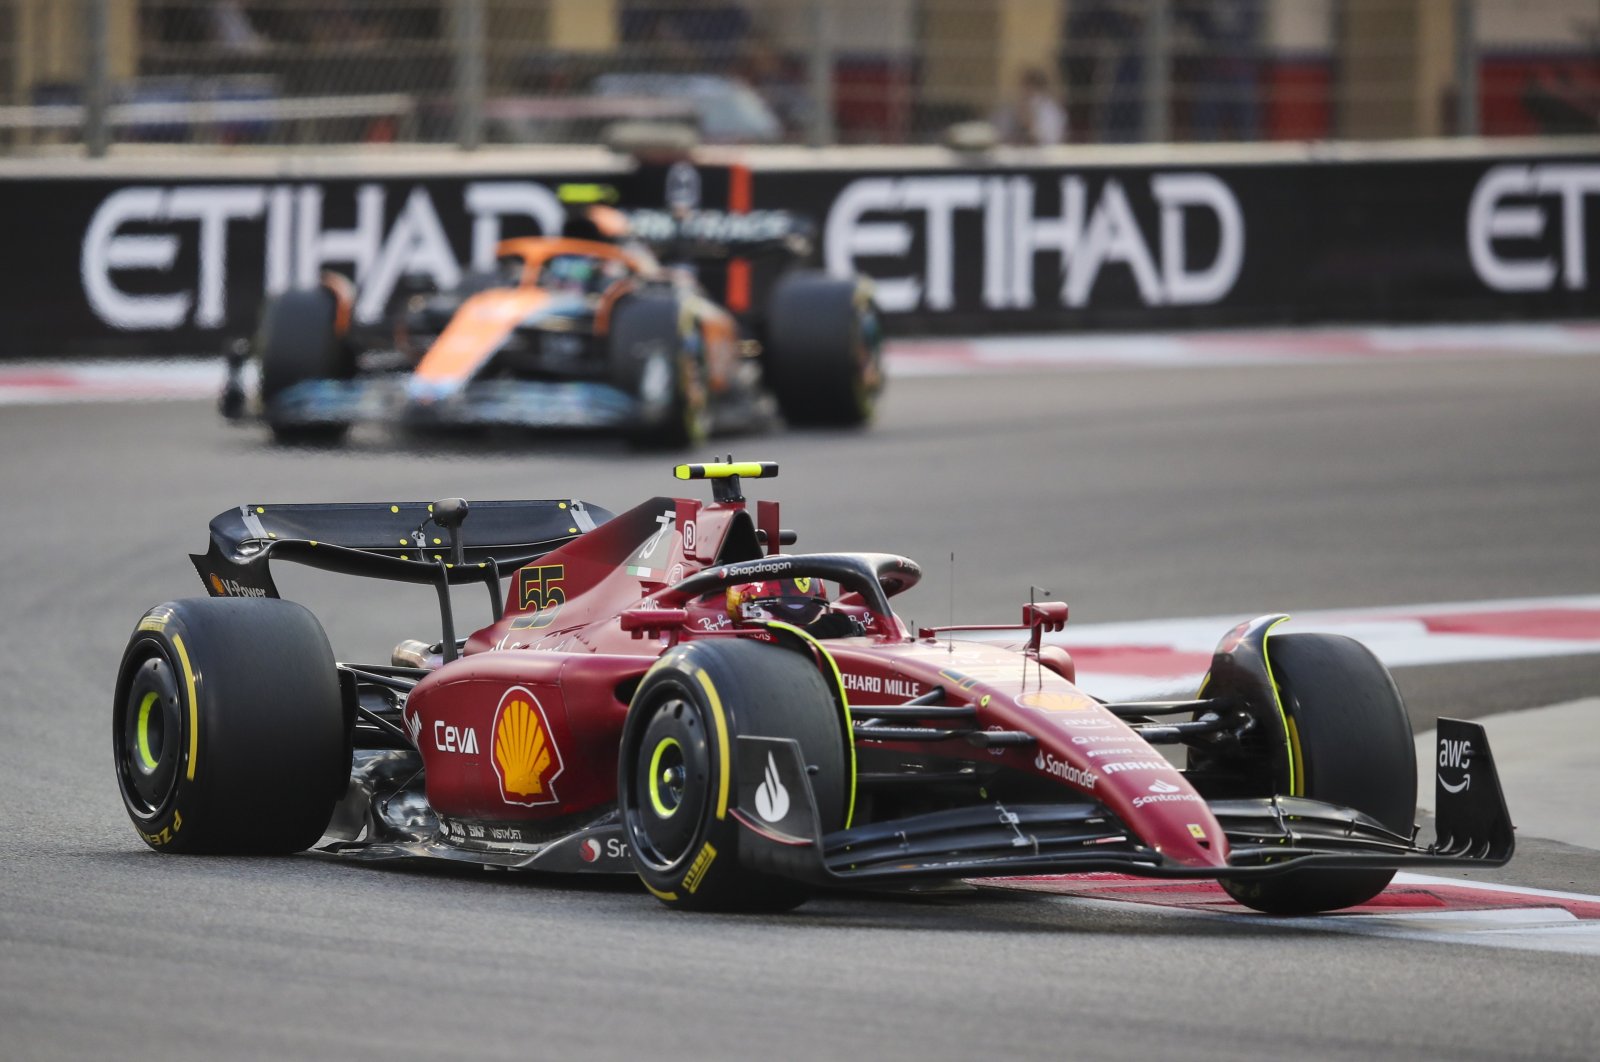 Spanish Formula One driver Carlos Sainz of Scuderia Ferrari in action during the Formula One Abu Dhabi Grand Prix at Yas Marina Circuit, Abu Dhabi, United Arab Emirates, Nov. 20, 2022. (EPA Photo)